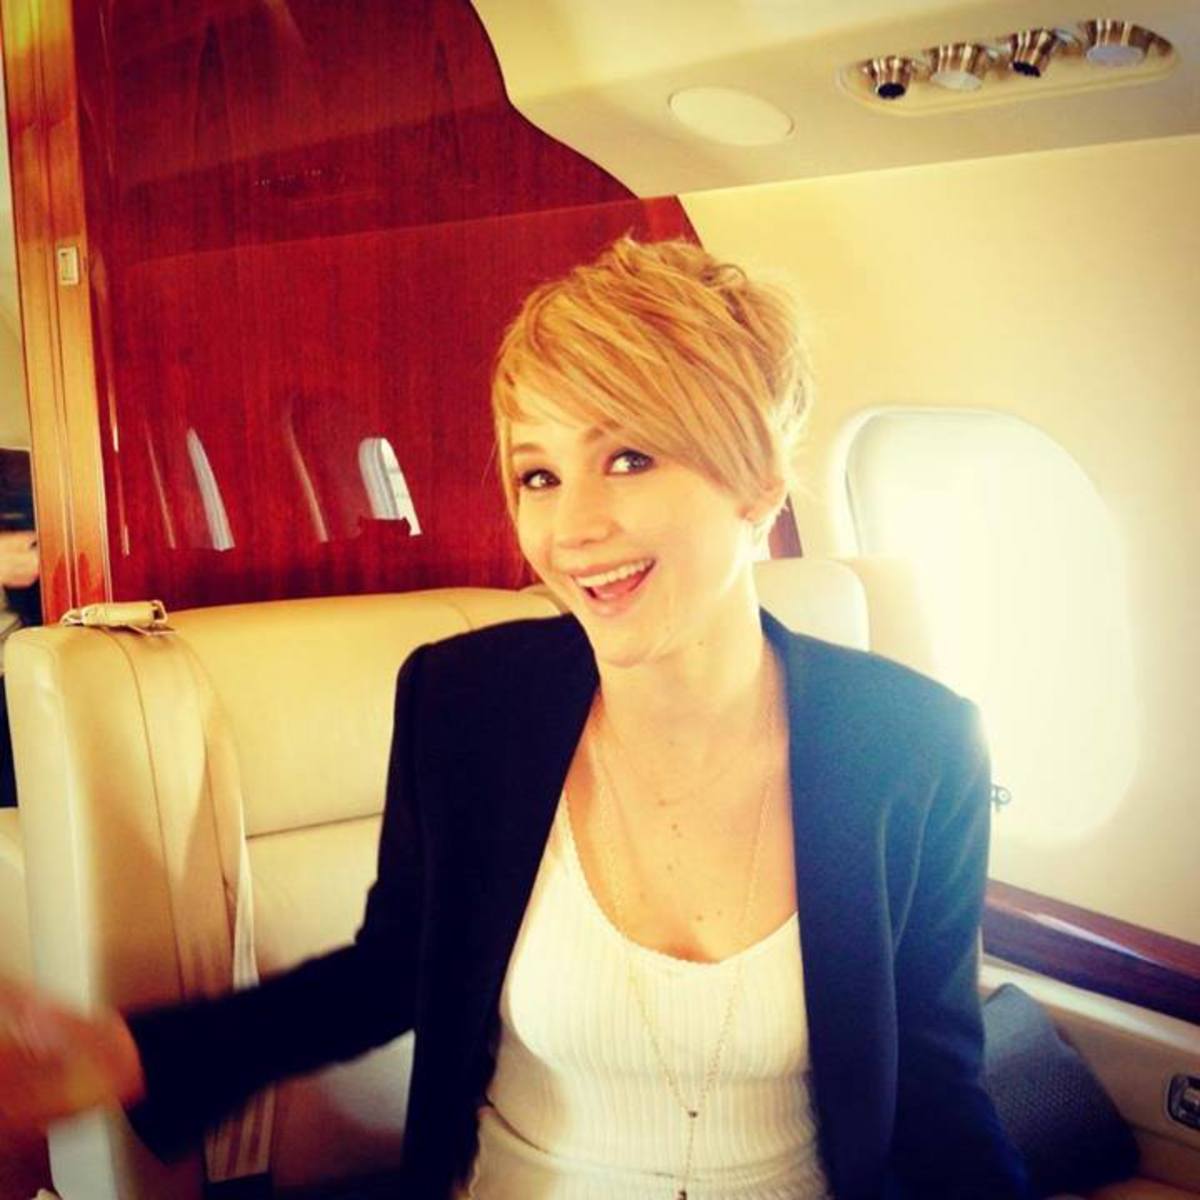 Compare Contrast Jennifer Lawrence Short Hair Vs Gwyneth Paltrow Short Hair Beautygeeks